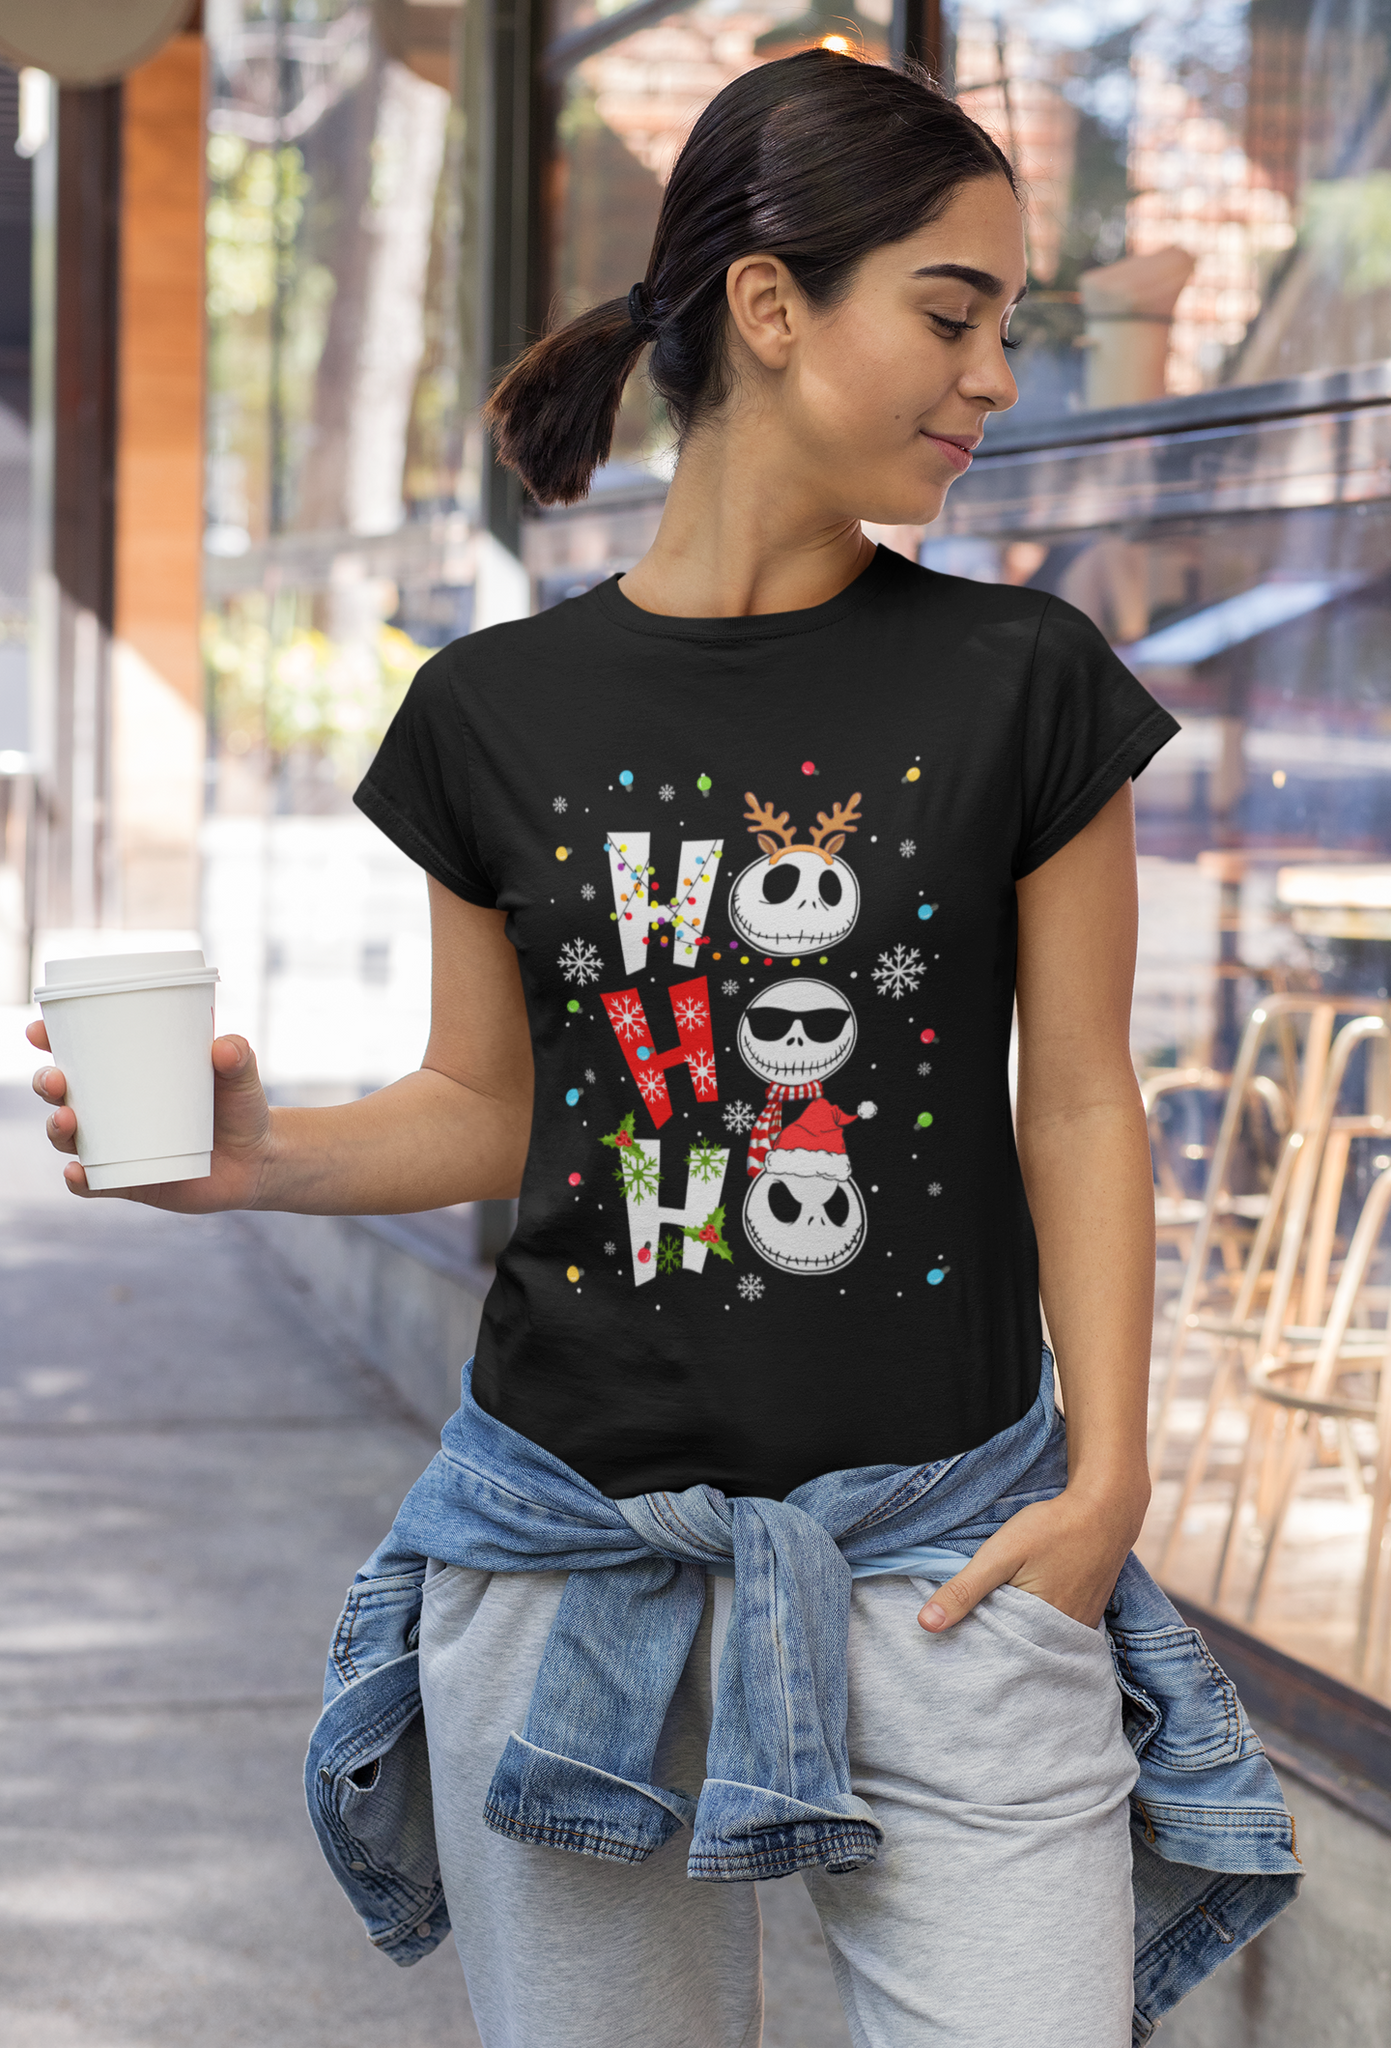 Nightmare Before Christmas Shirt, Ho Ho Ho Tshirt, Jack Skellington T Shirt, Christmas Gifts, Halloween Gifts